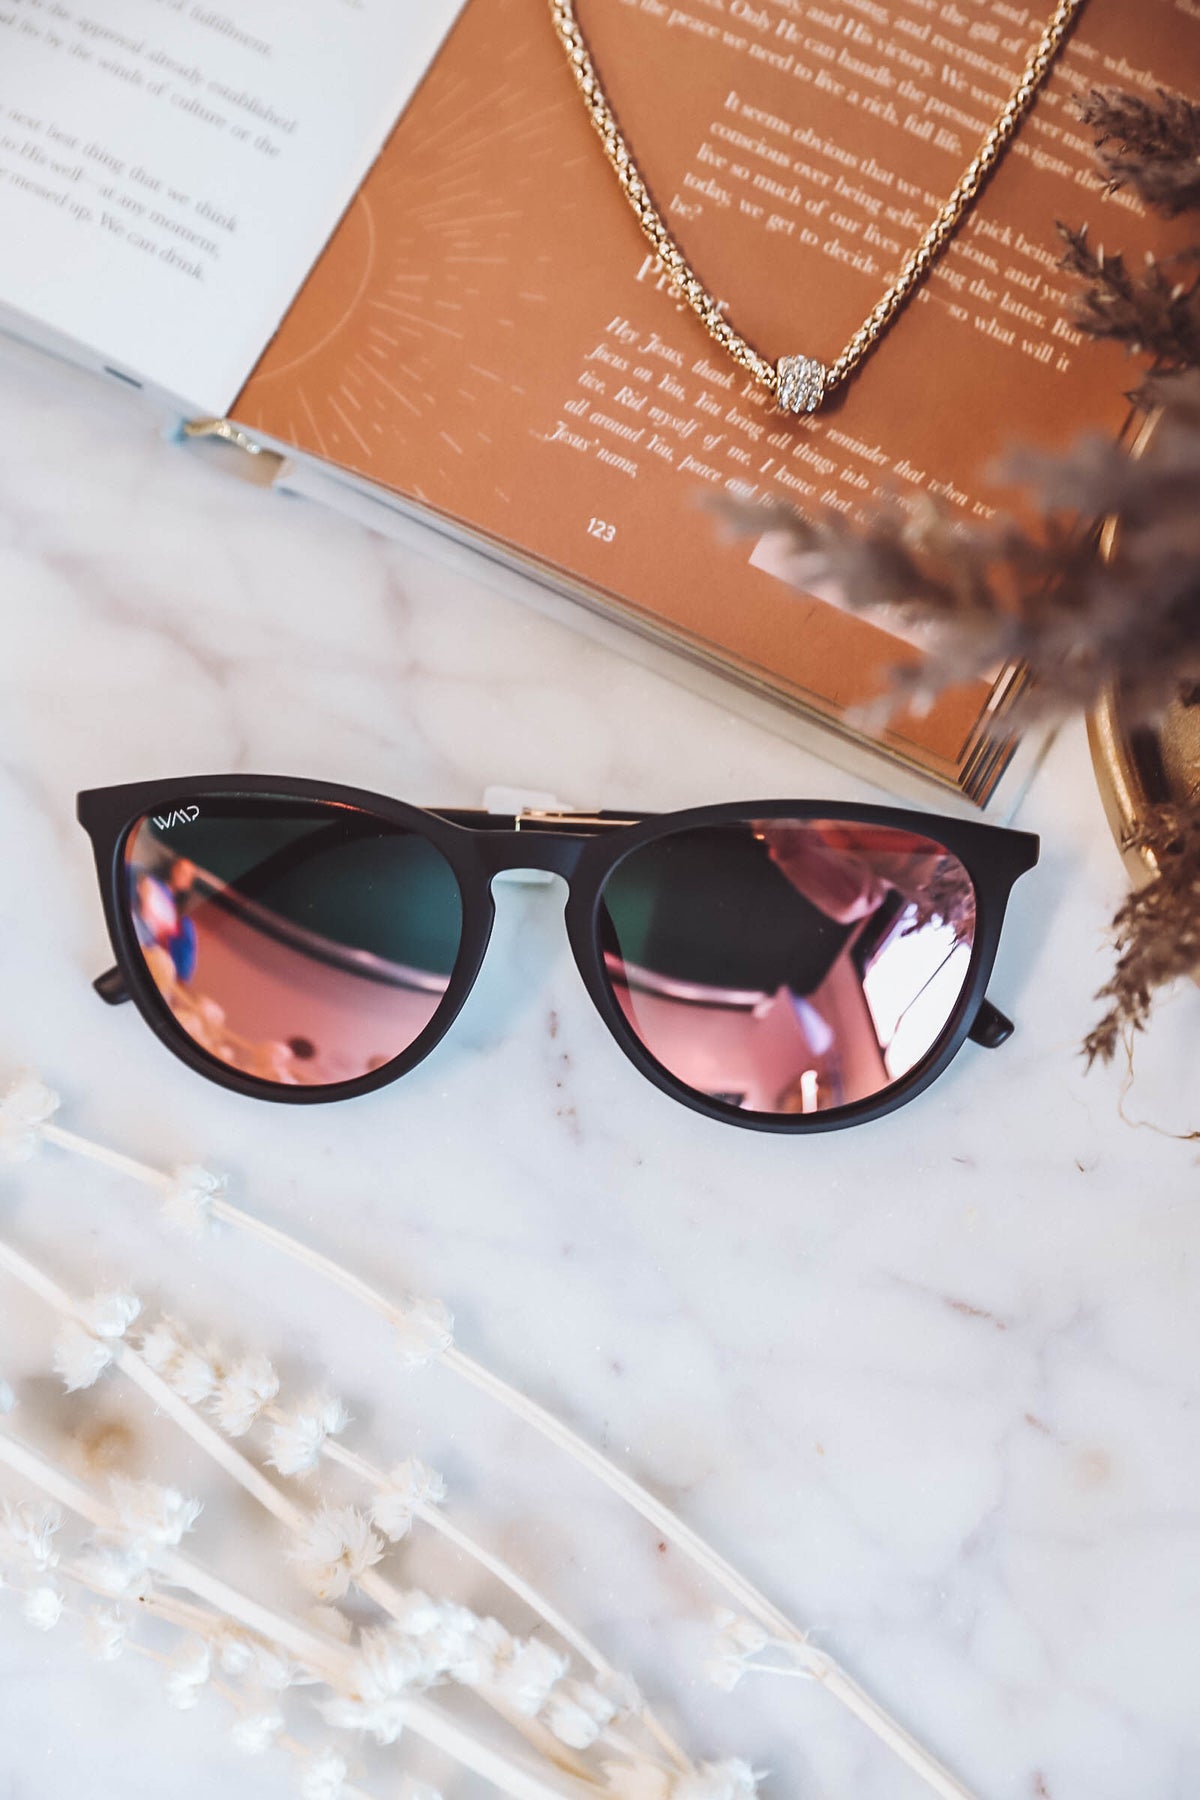 Drew WMP Sunglasses-Pink Mirror